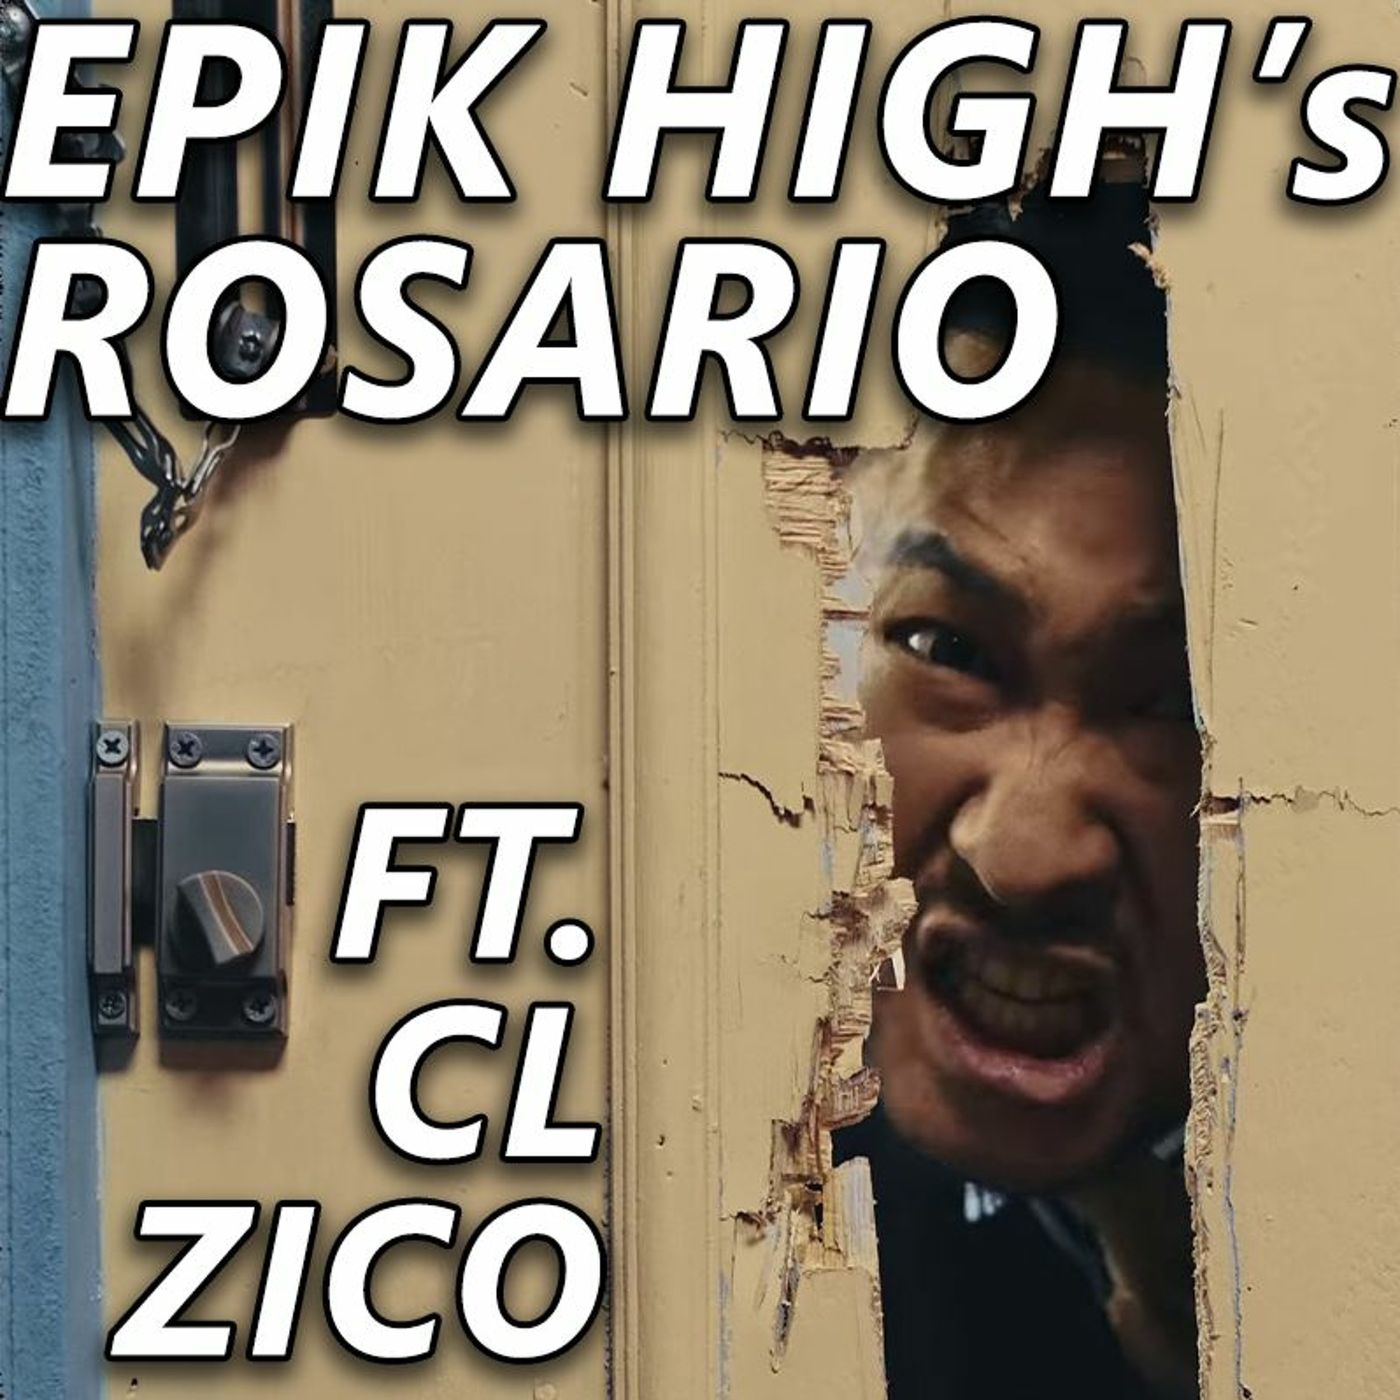 Epik High's Rosario